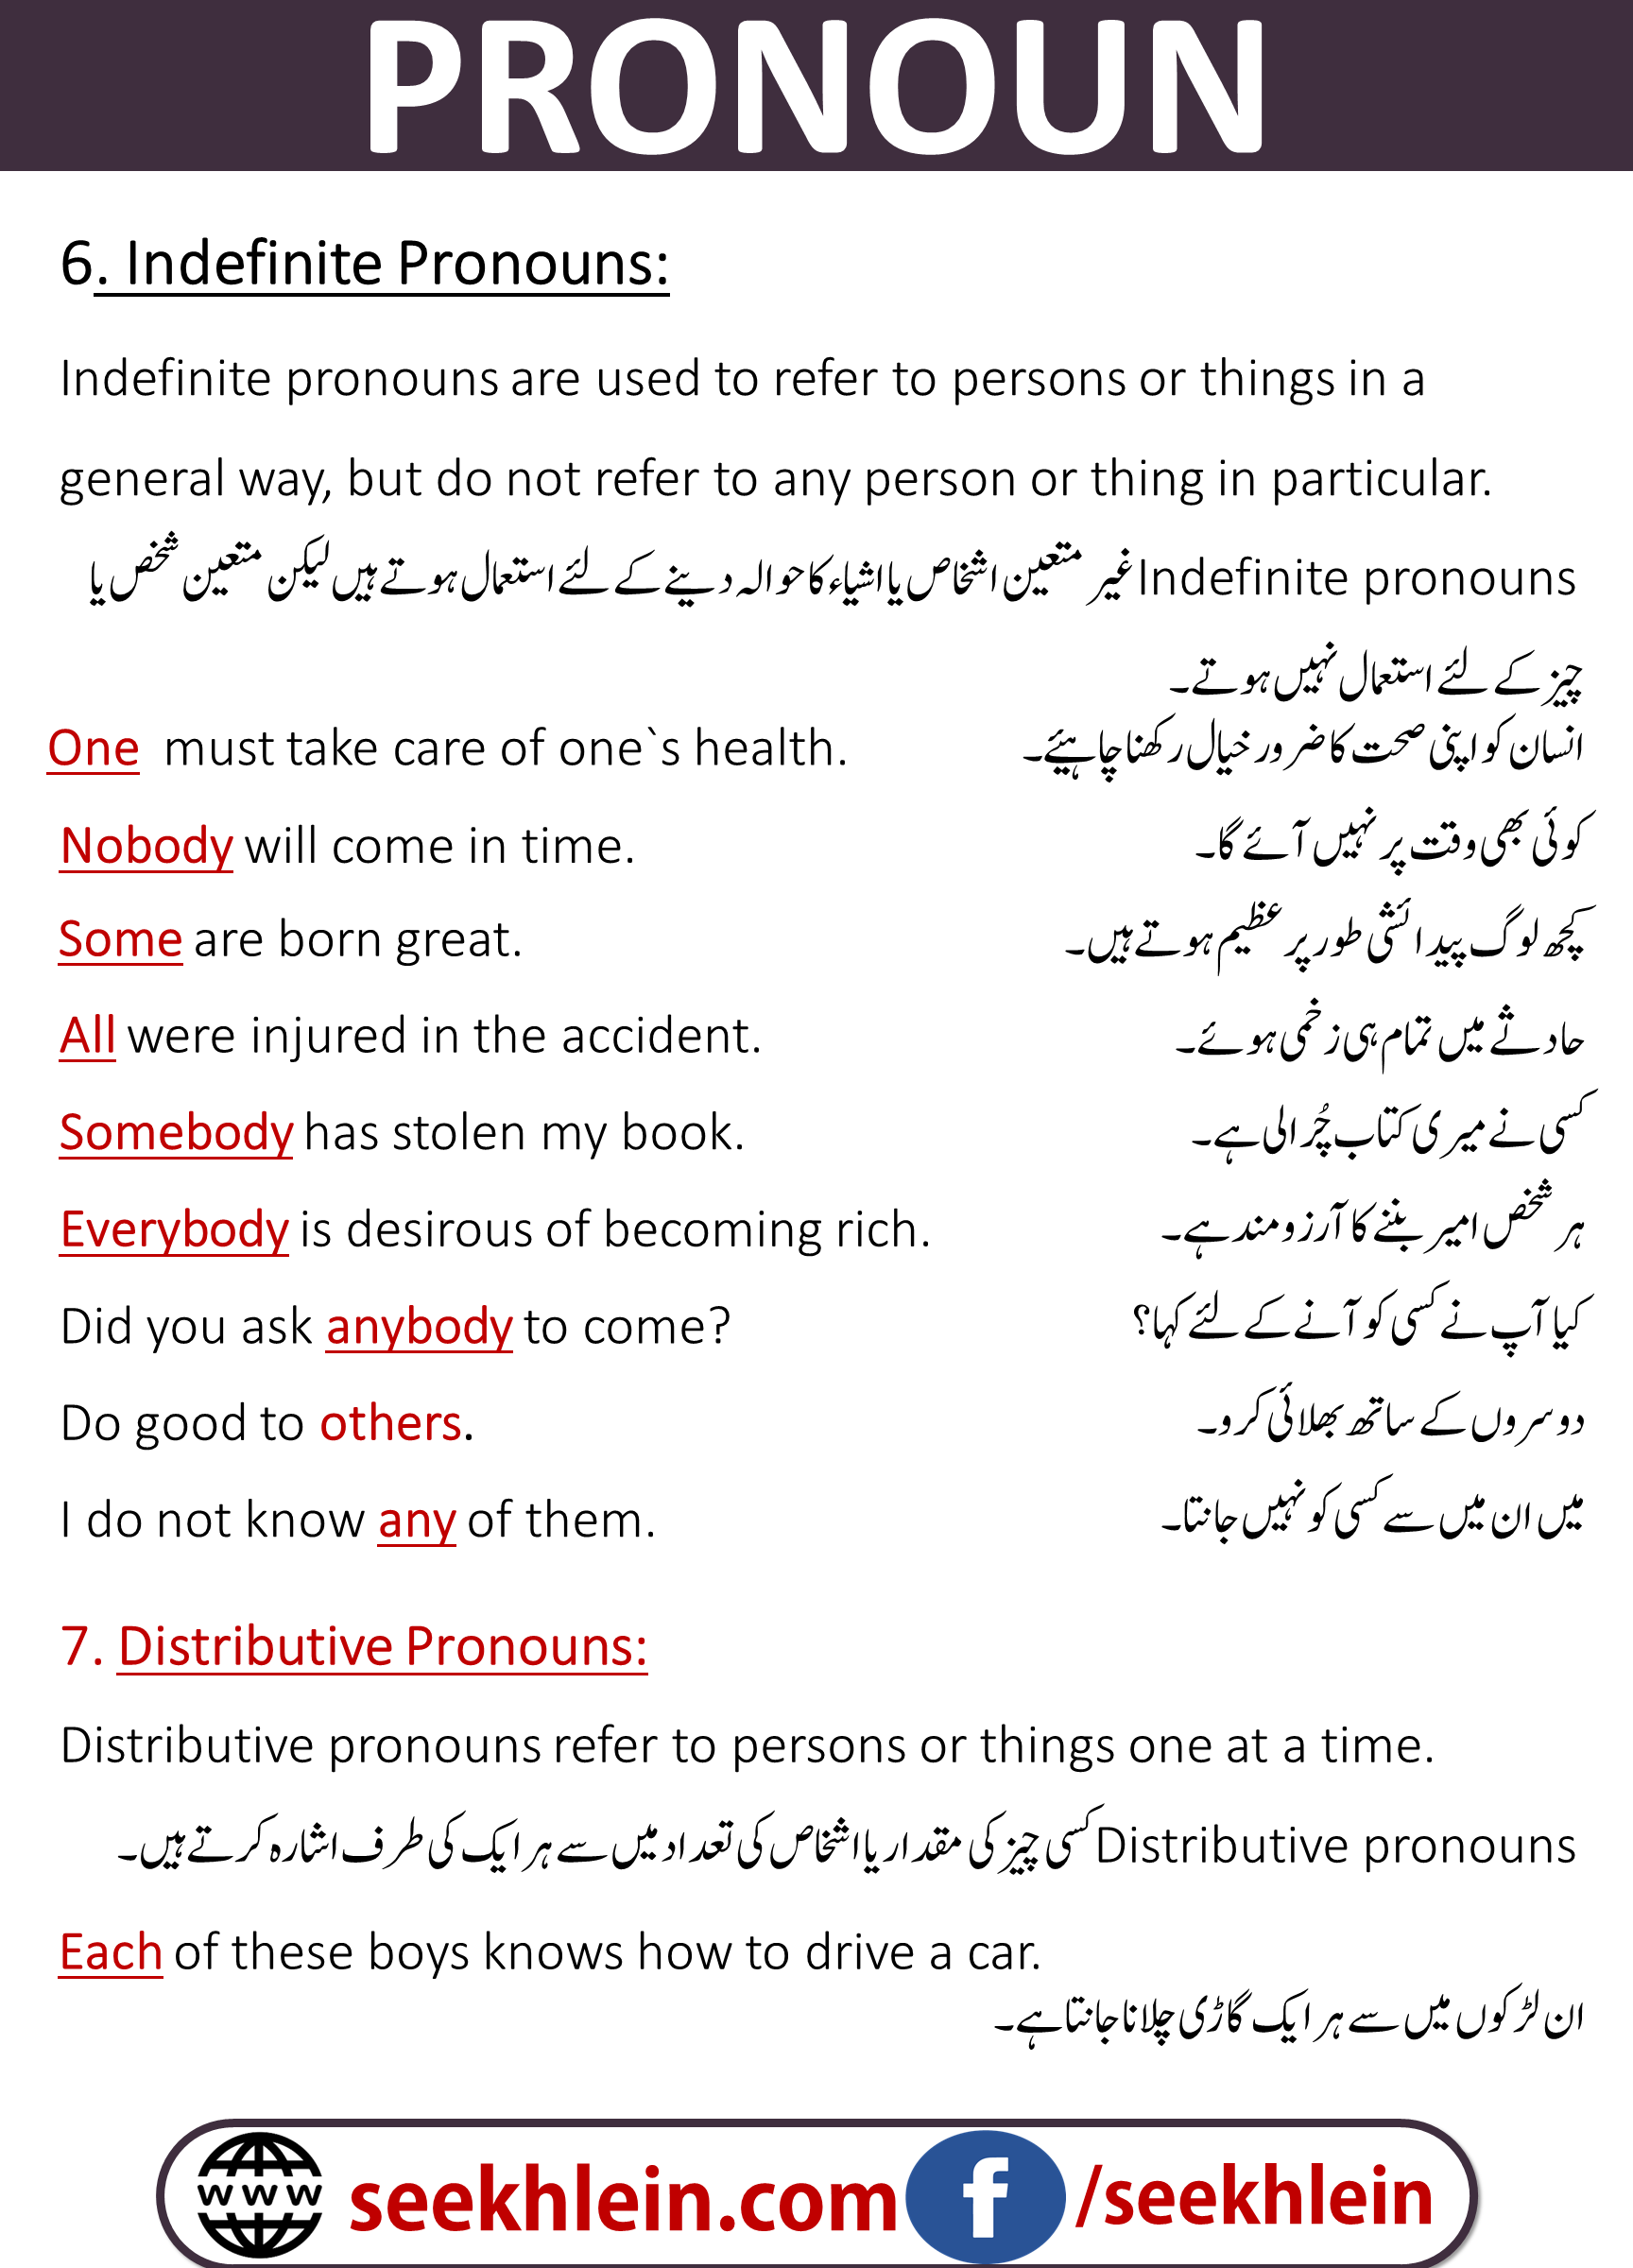 Pronoun Examples In A Sentence  Indefinite Pronouns Distributive Pronouns